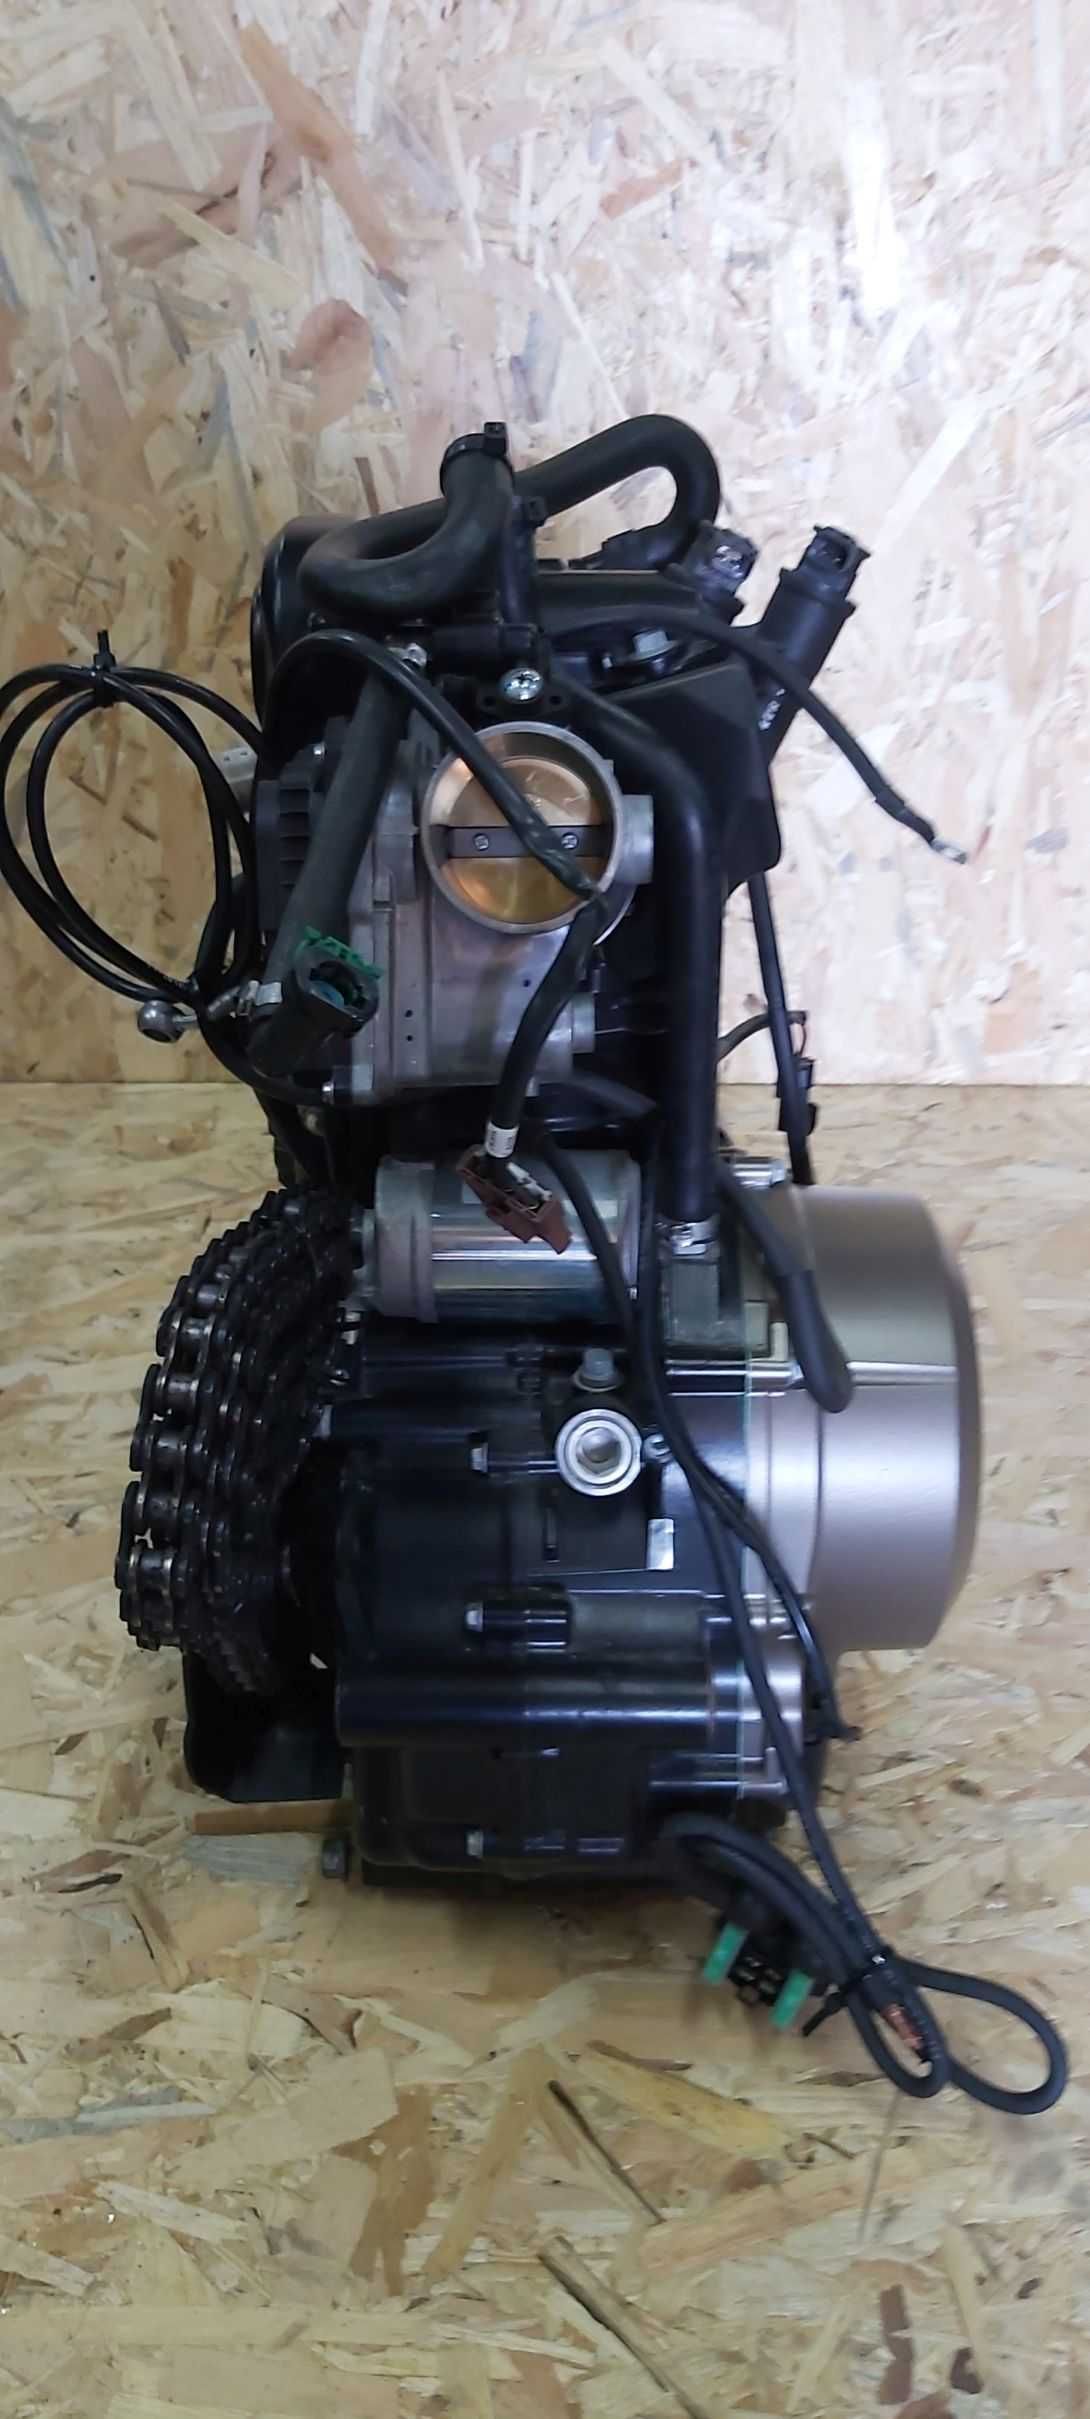 SWAP Husqvarna 701 KTM 690 kompletny 2019 rok licznik  quad buggy